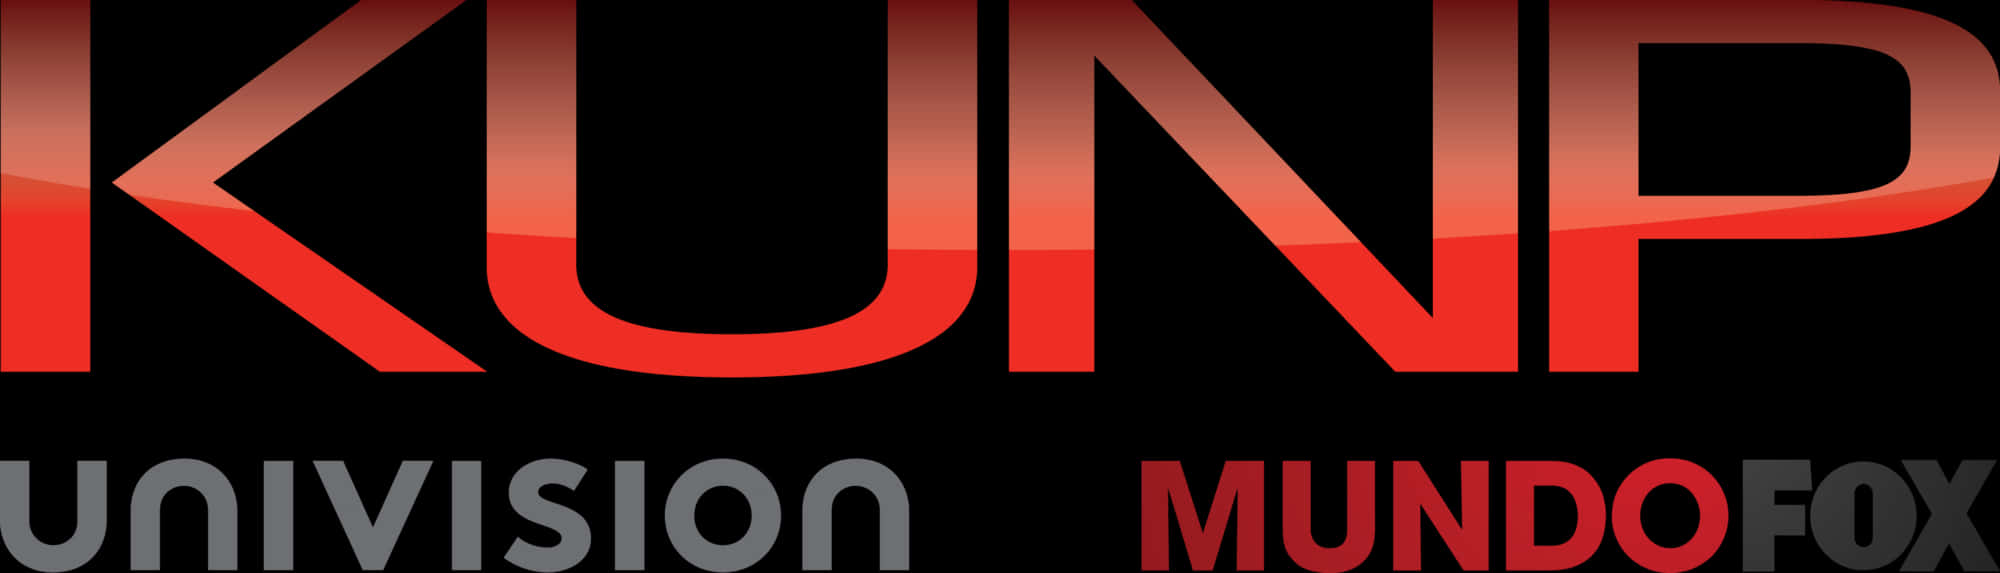 Univision Mundo Fox Logo Red Gradient Background